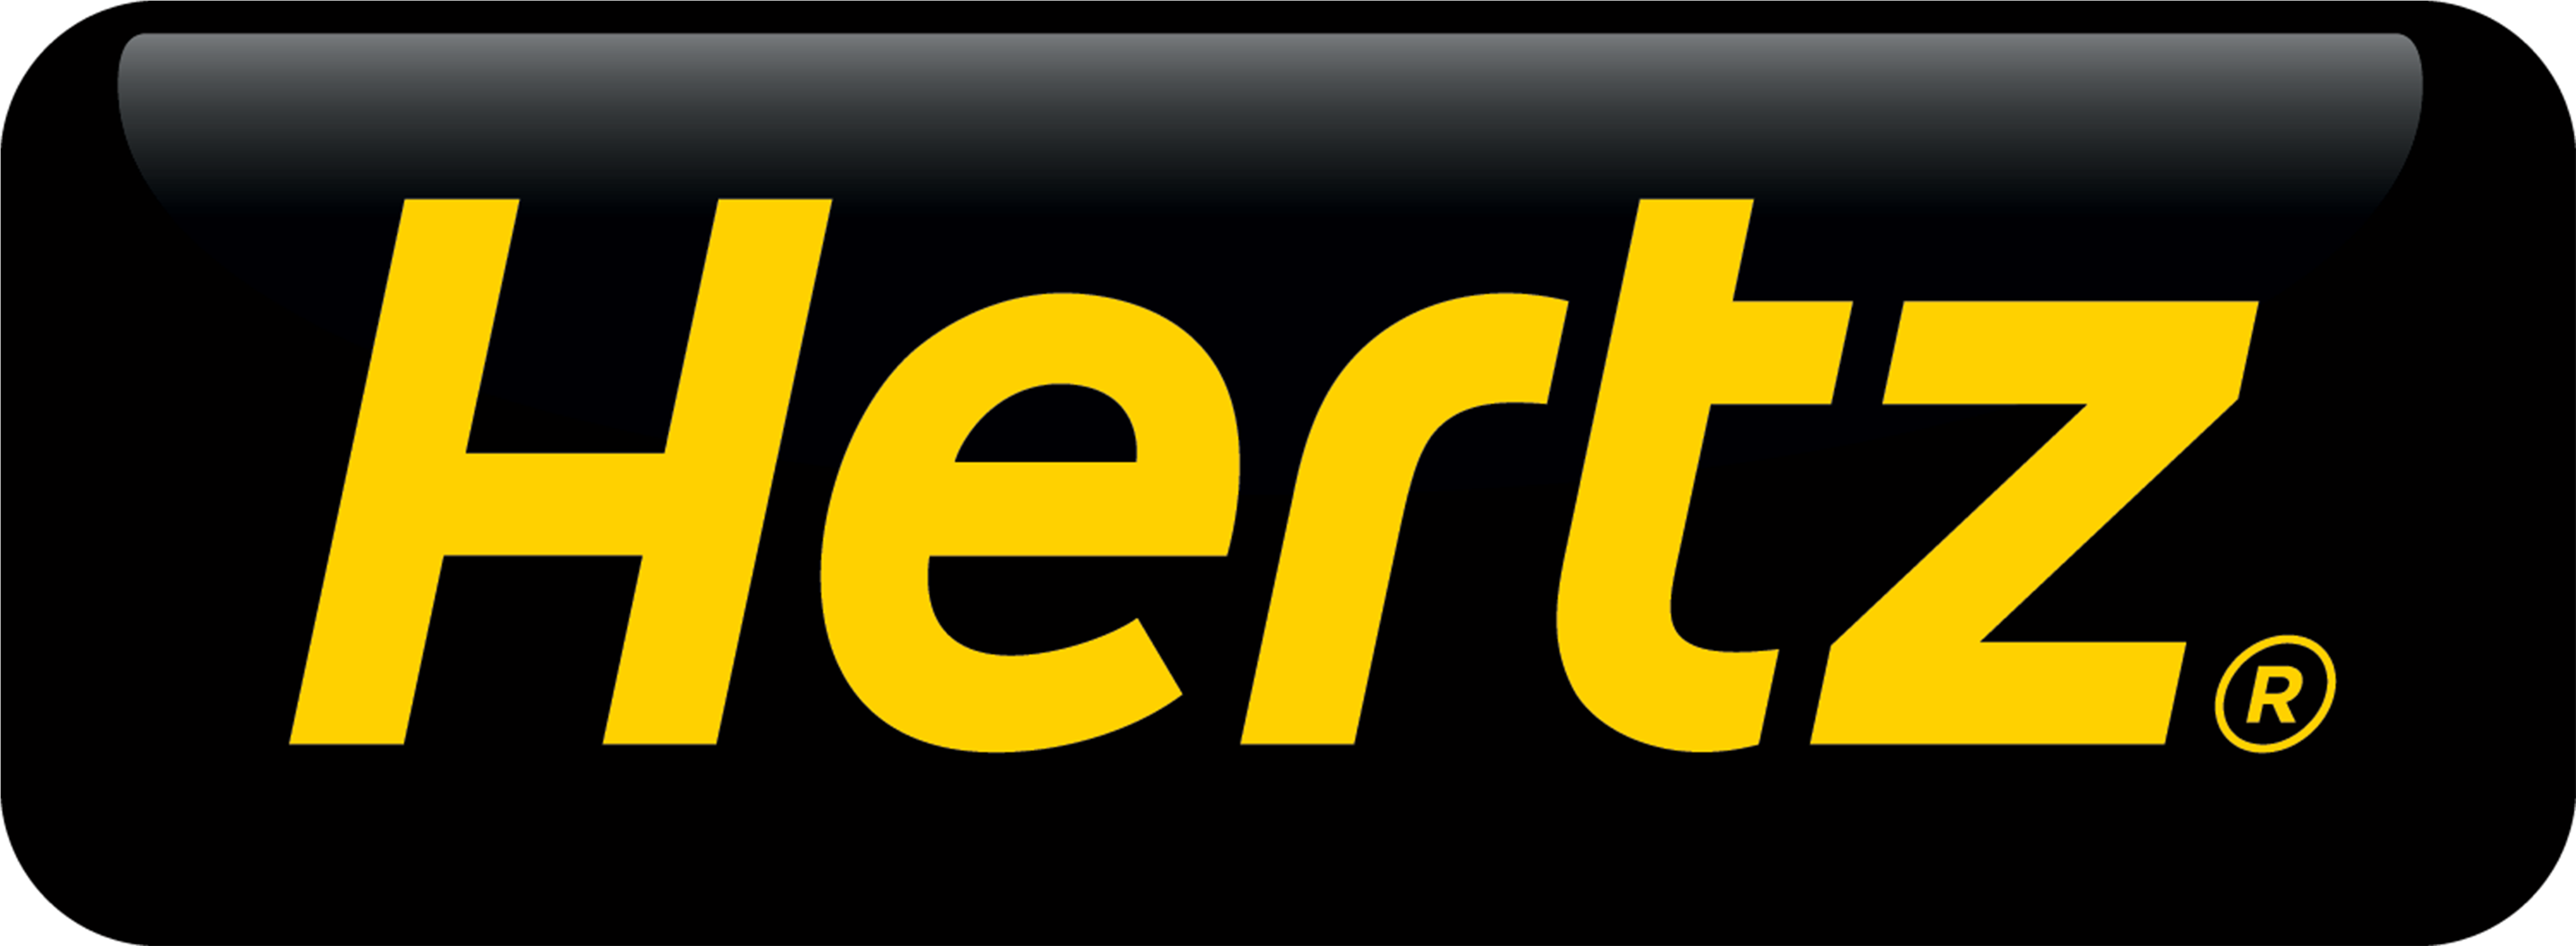 Avis Car Sale >> Hertz Global Holdings - Hertz Car Rental Logo (4500x2700)